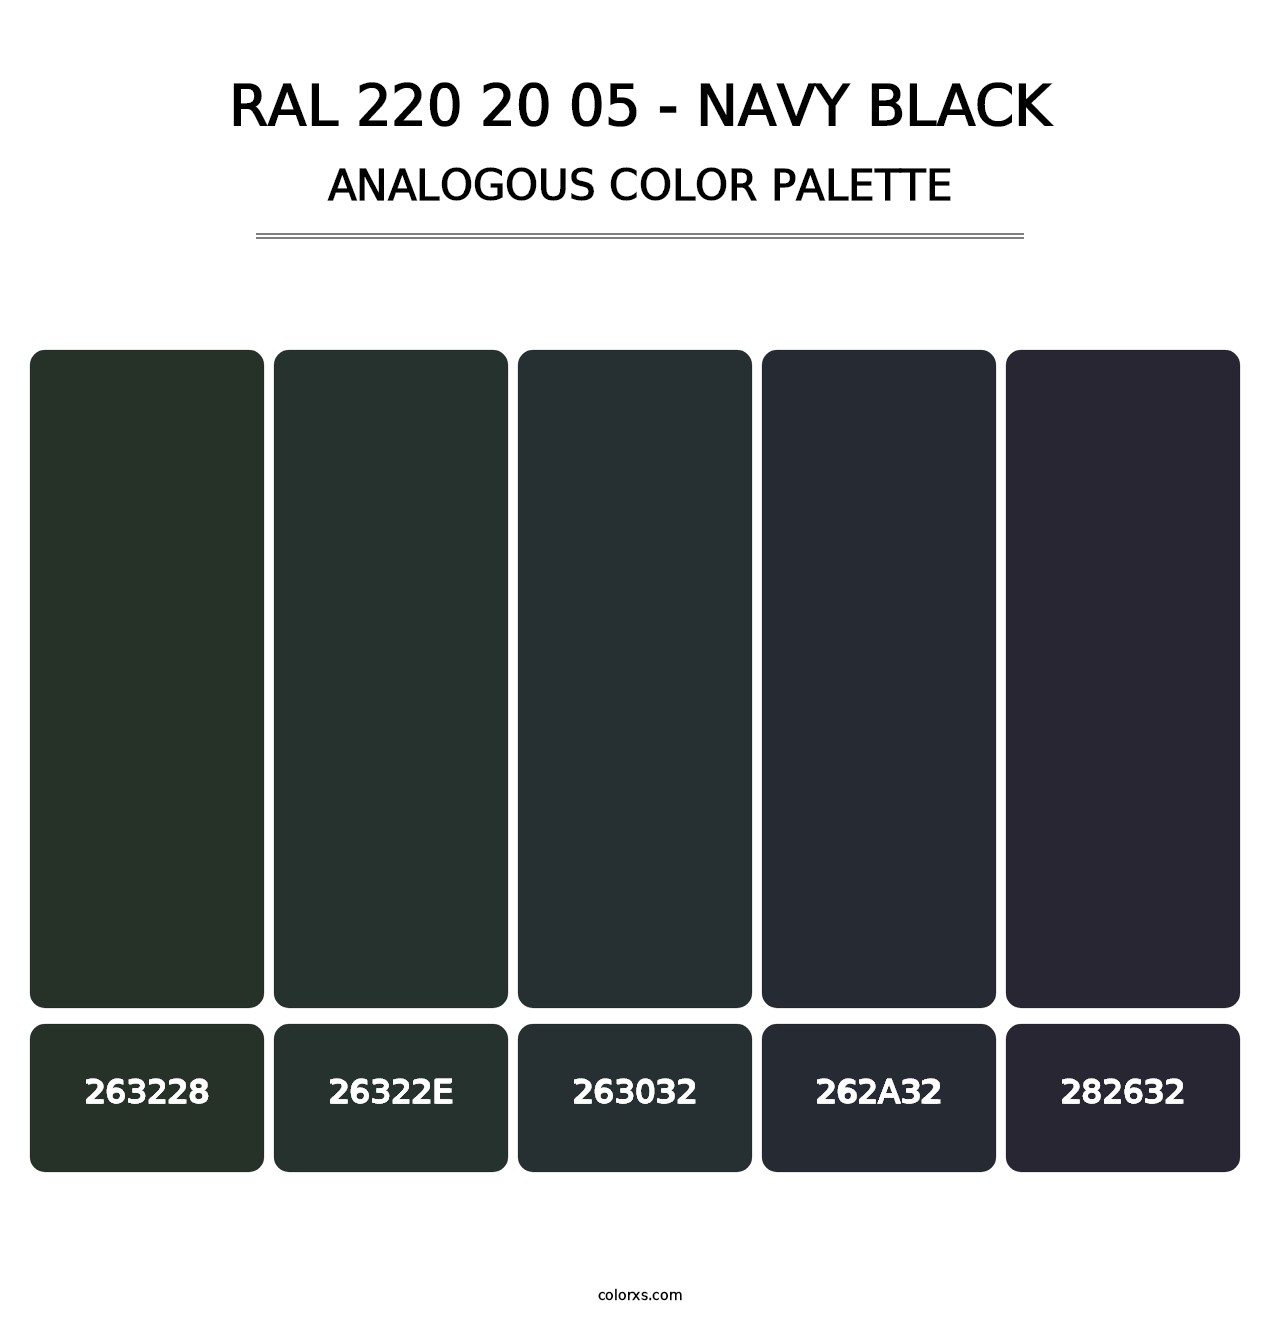 RAL 220 20 05 - Navy Black - Analogous Color Palette